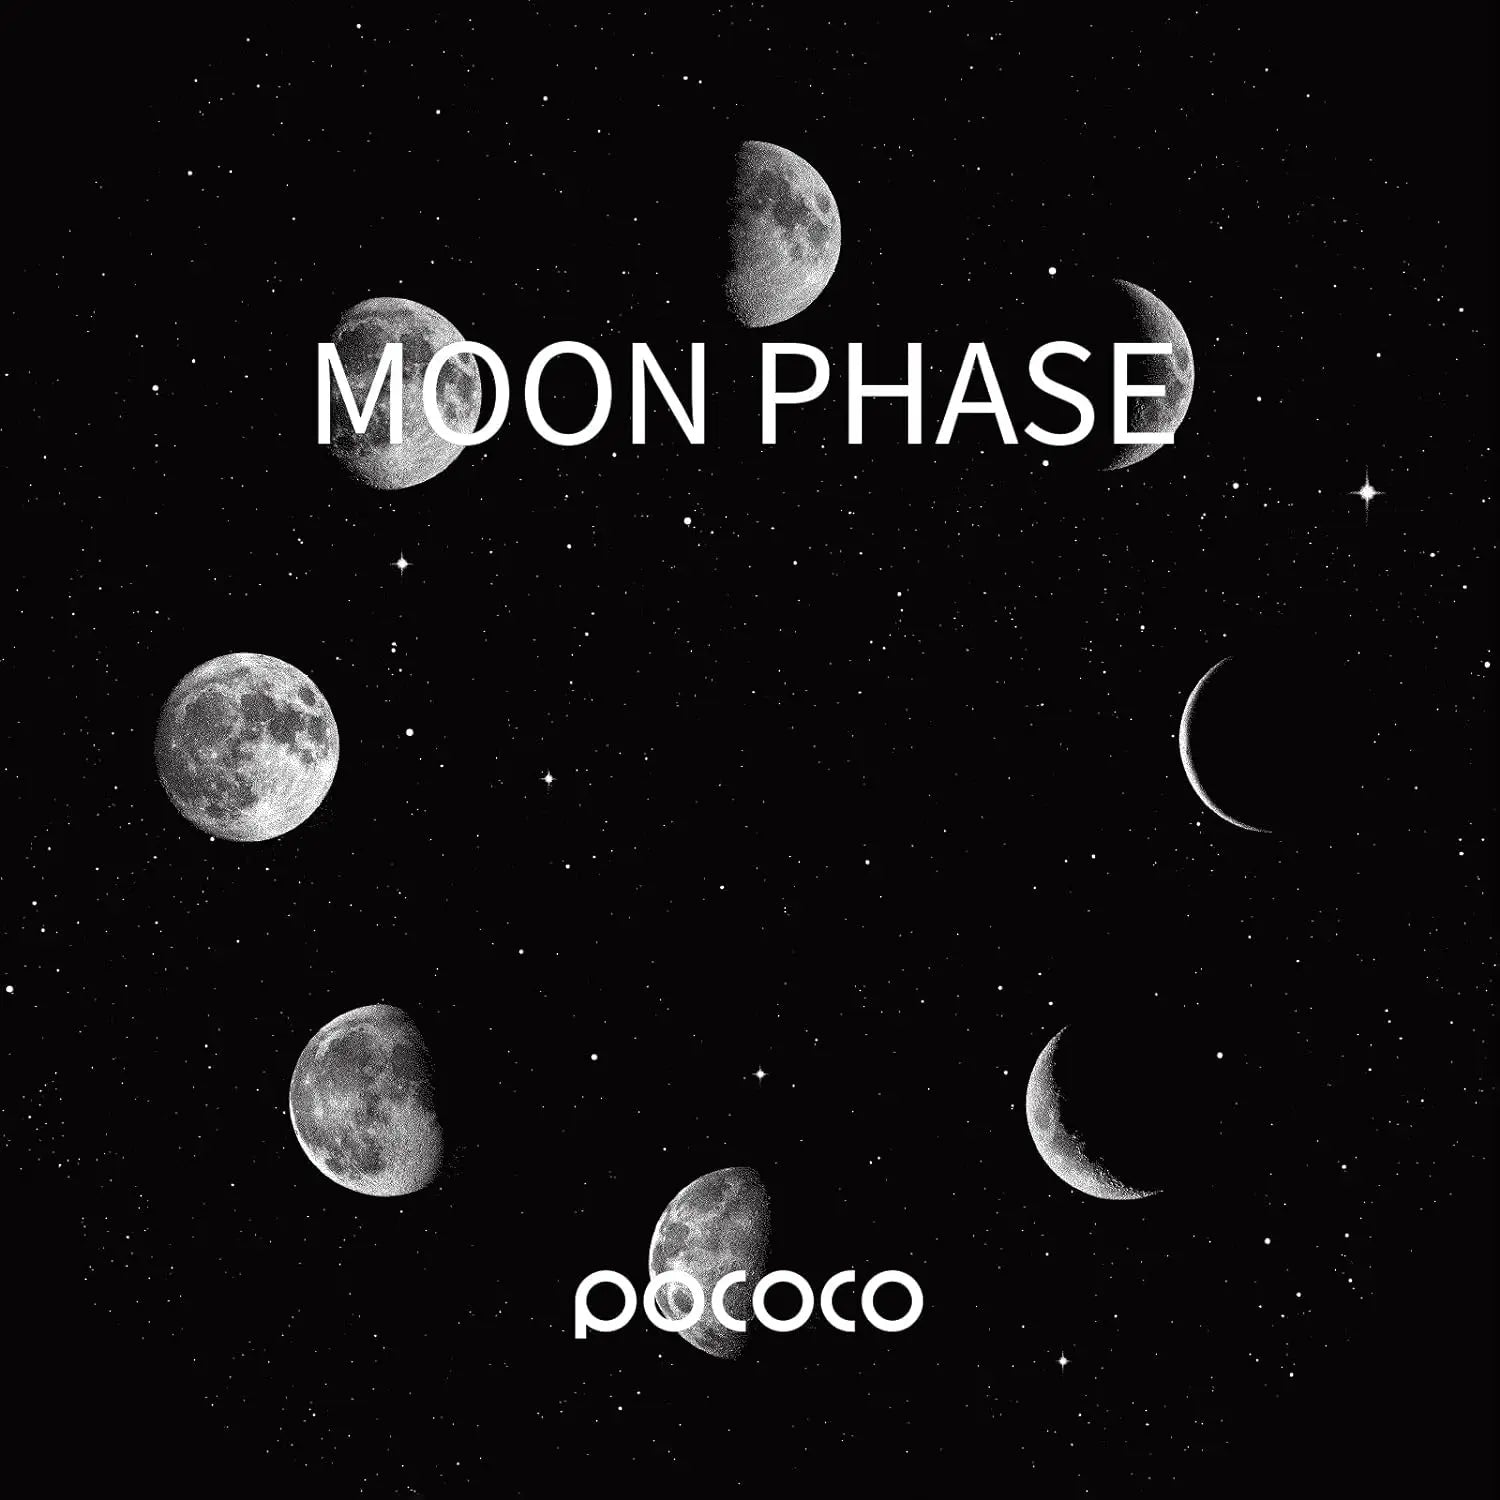 Immersive Planet - Discs for POCOCO Galaxy Projector, 5k Ultra HD